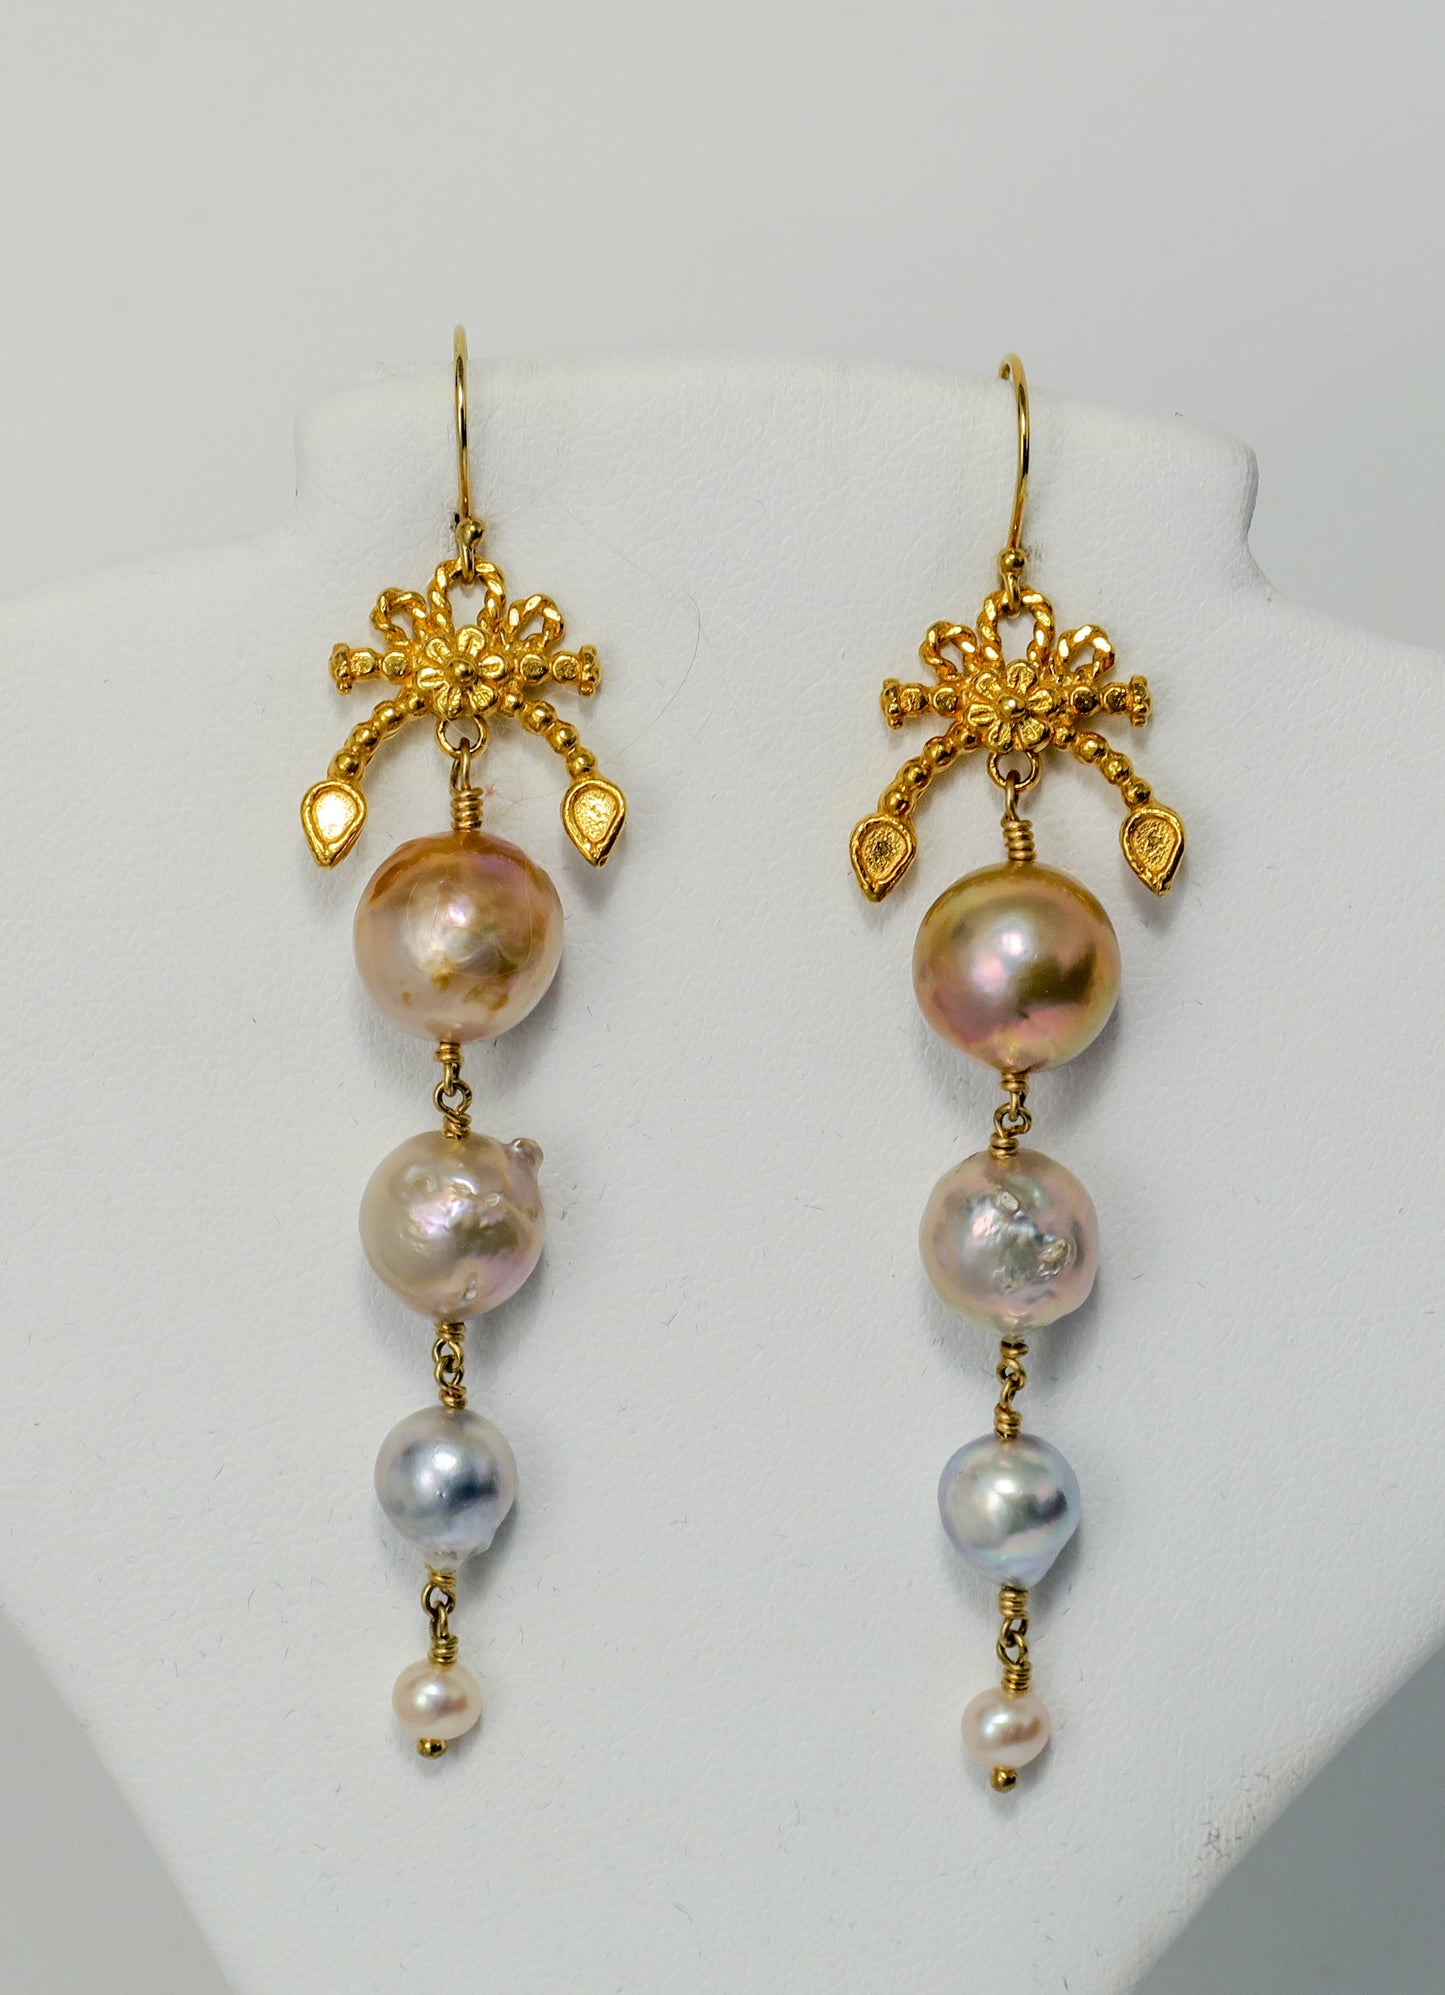 18K Gold Vermeil and Fresh Water Pearls Earrings | by Vanessa Mellet